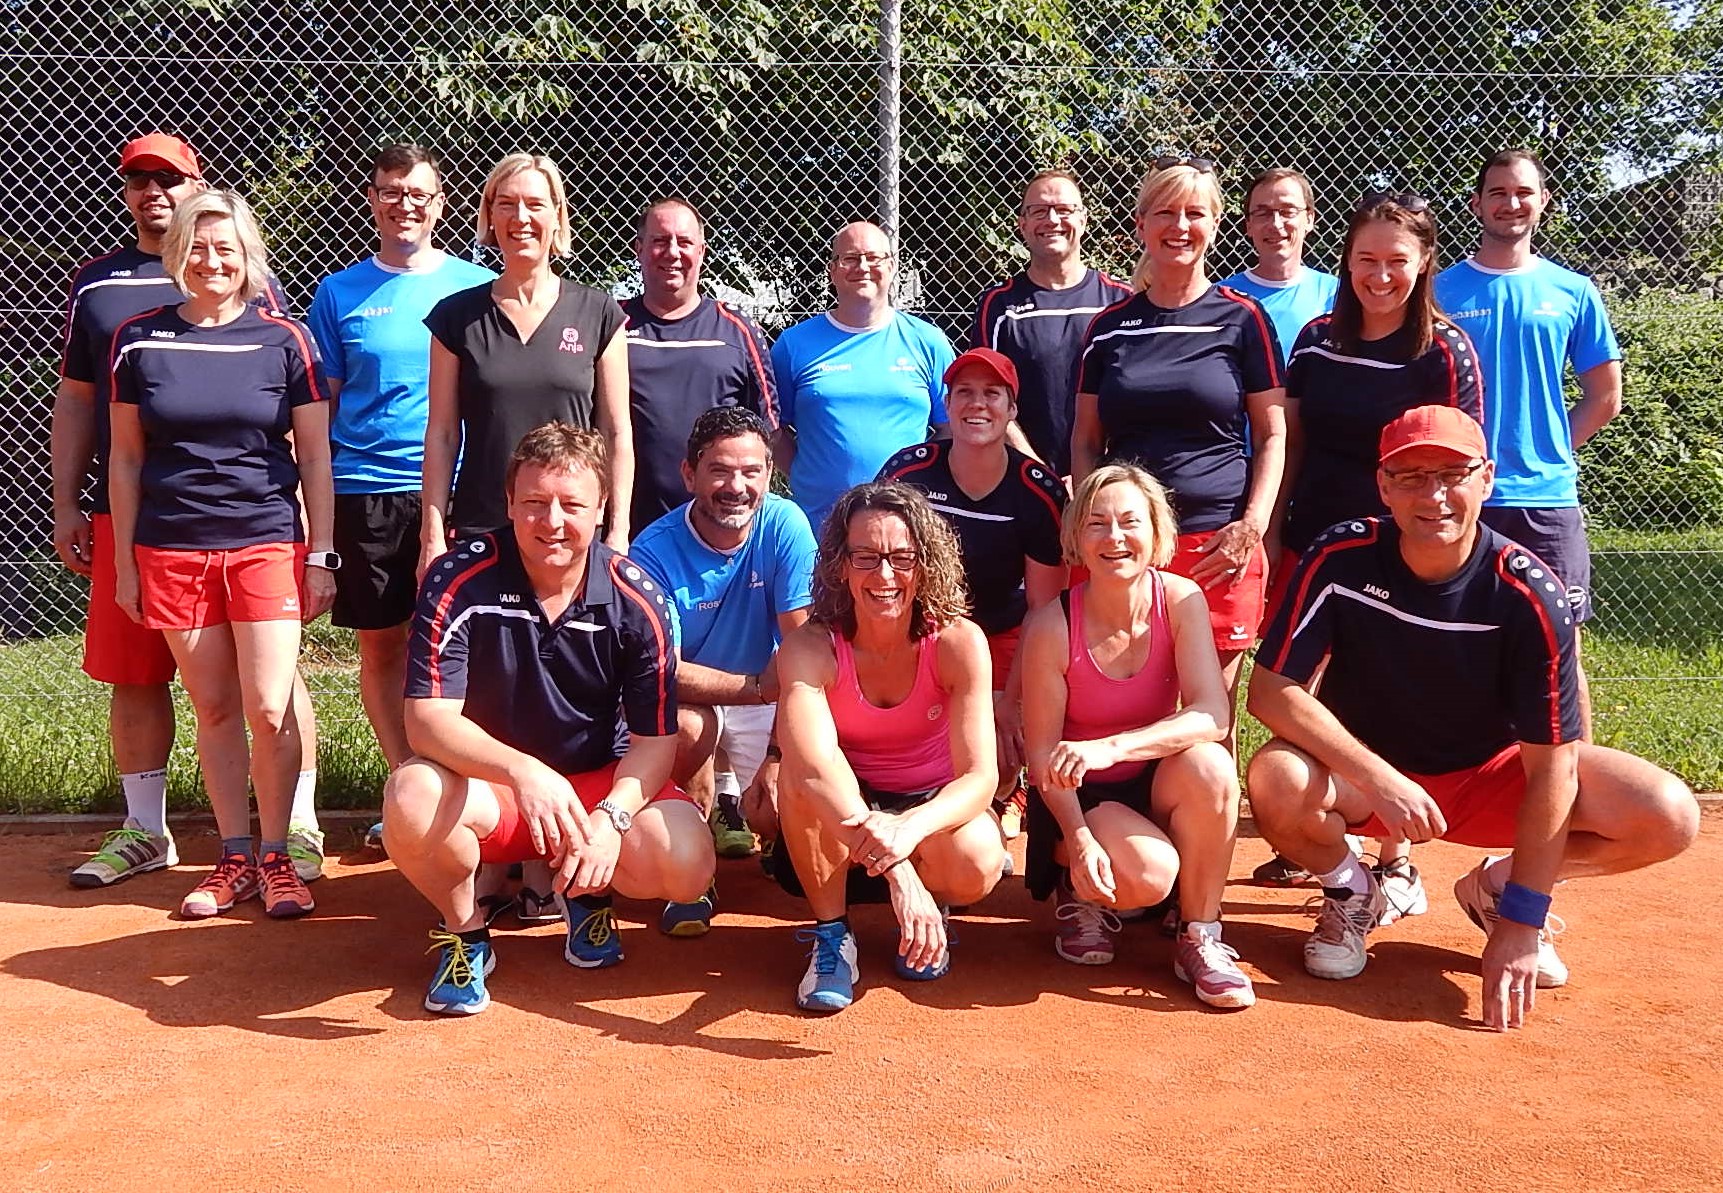 Gruppenfoto mit Httlingen Tennis 03.06.18